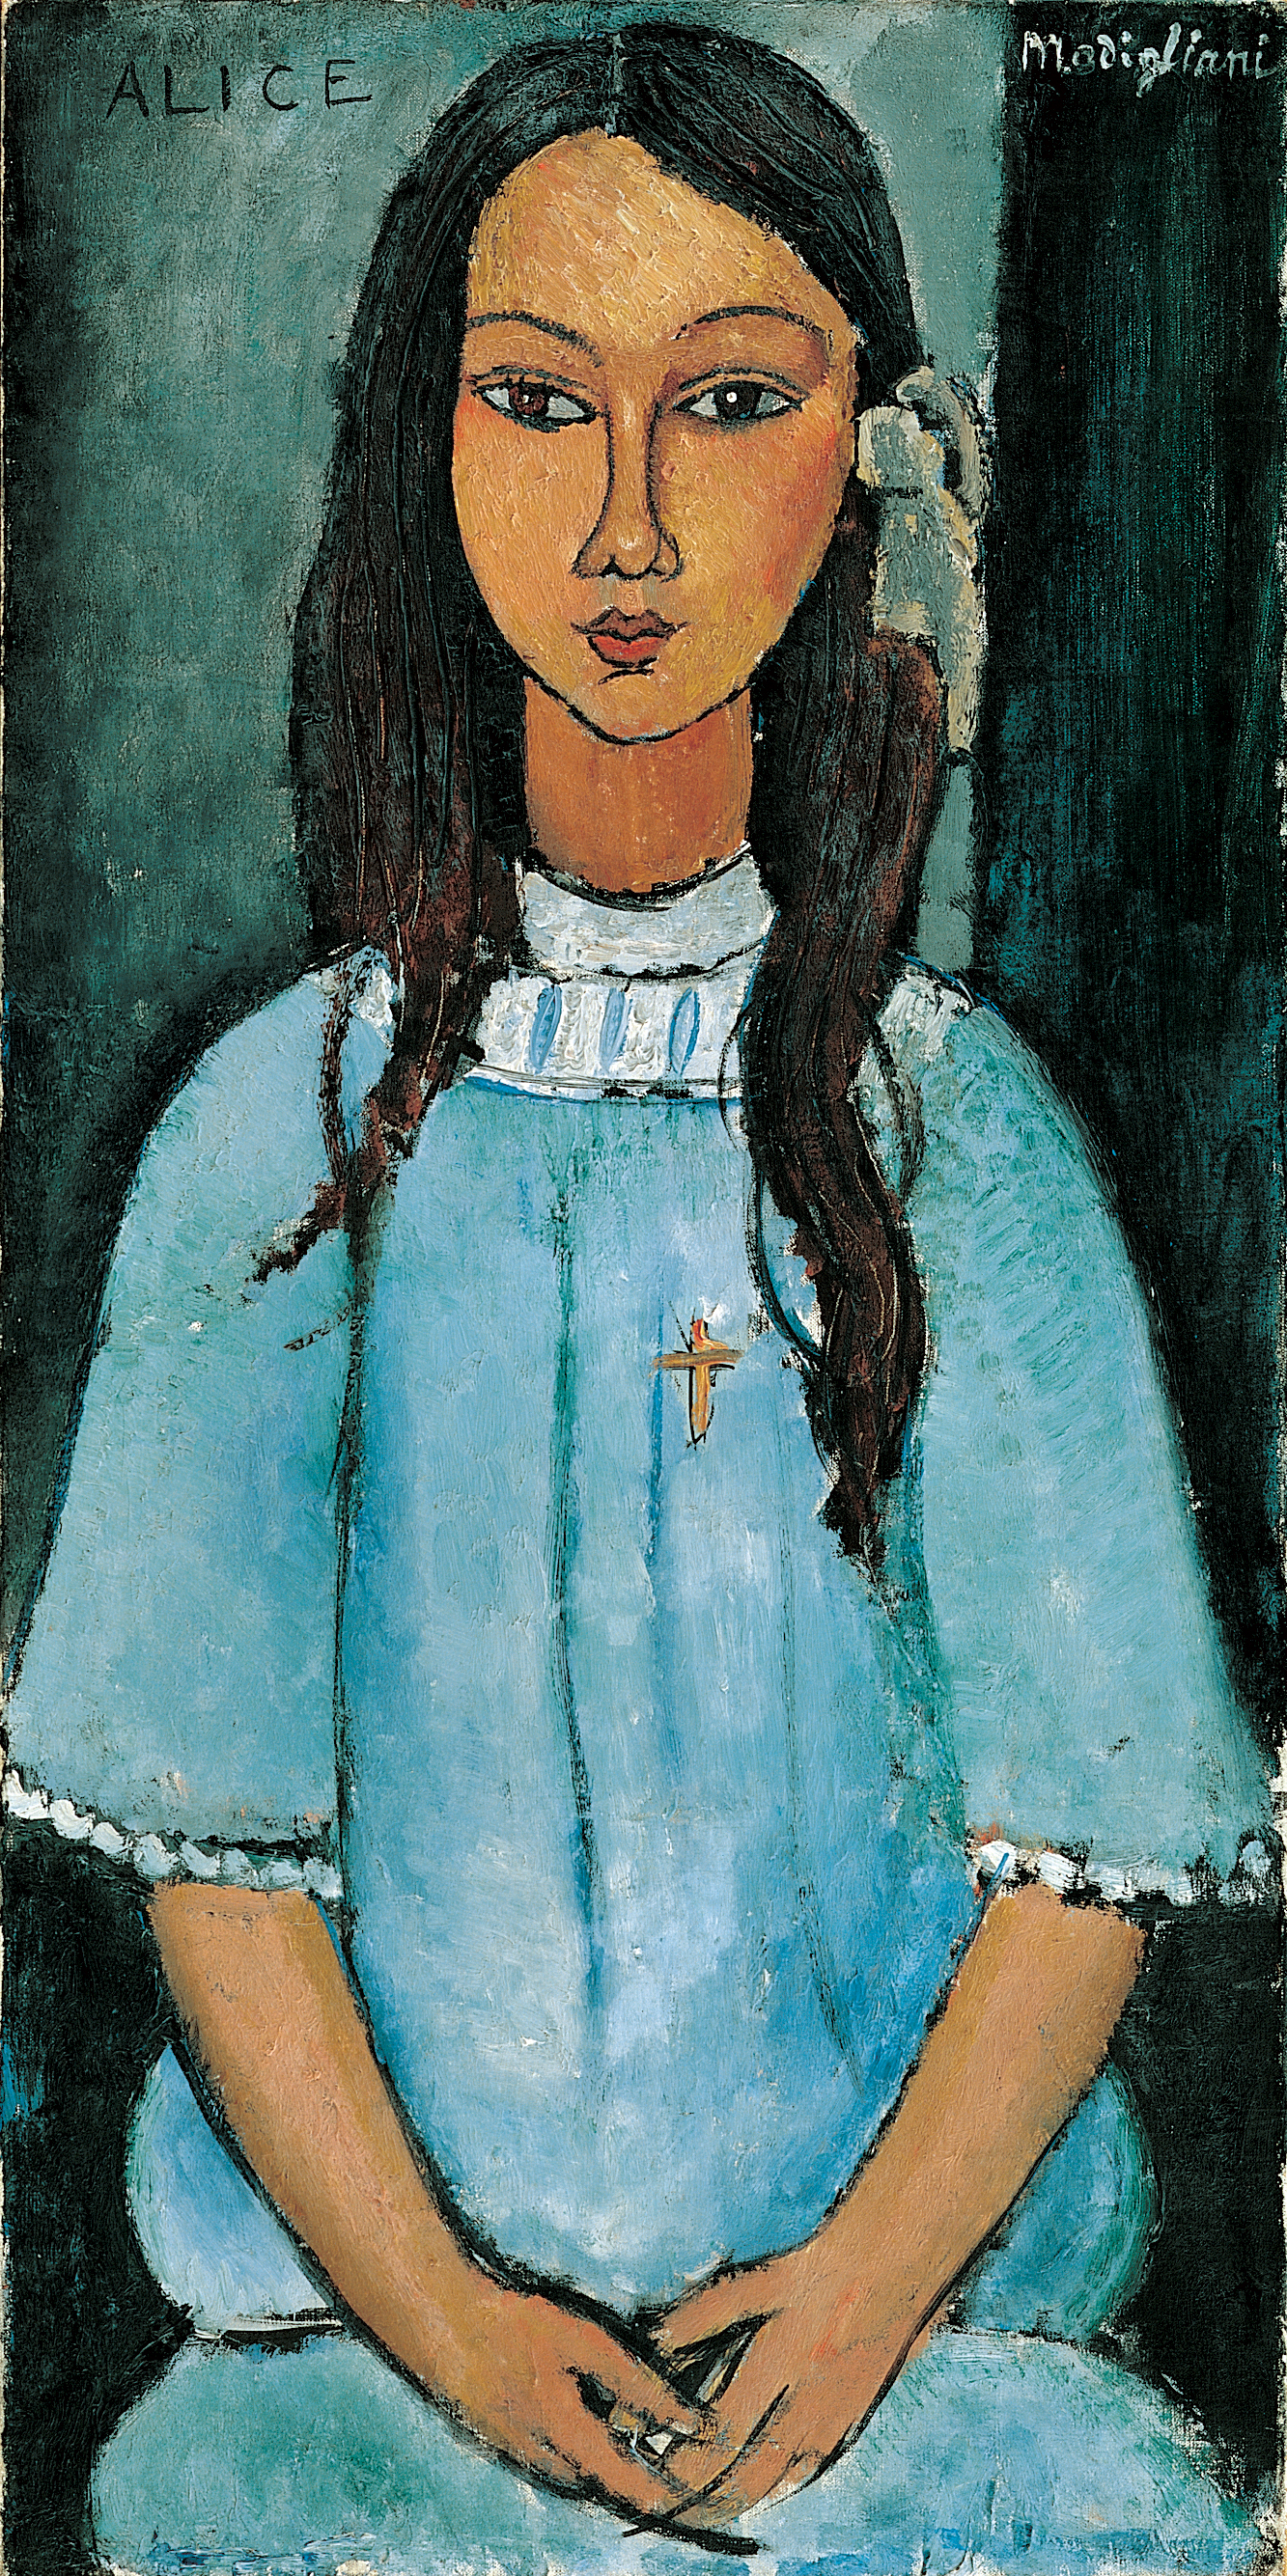 Alice by Amedeo Modigliani - 1918 